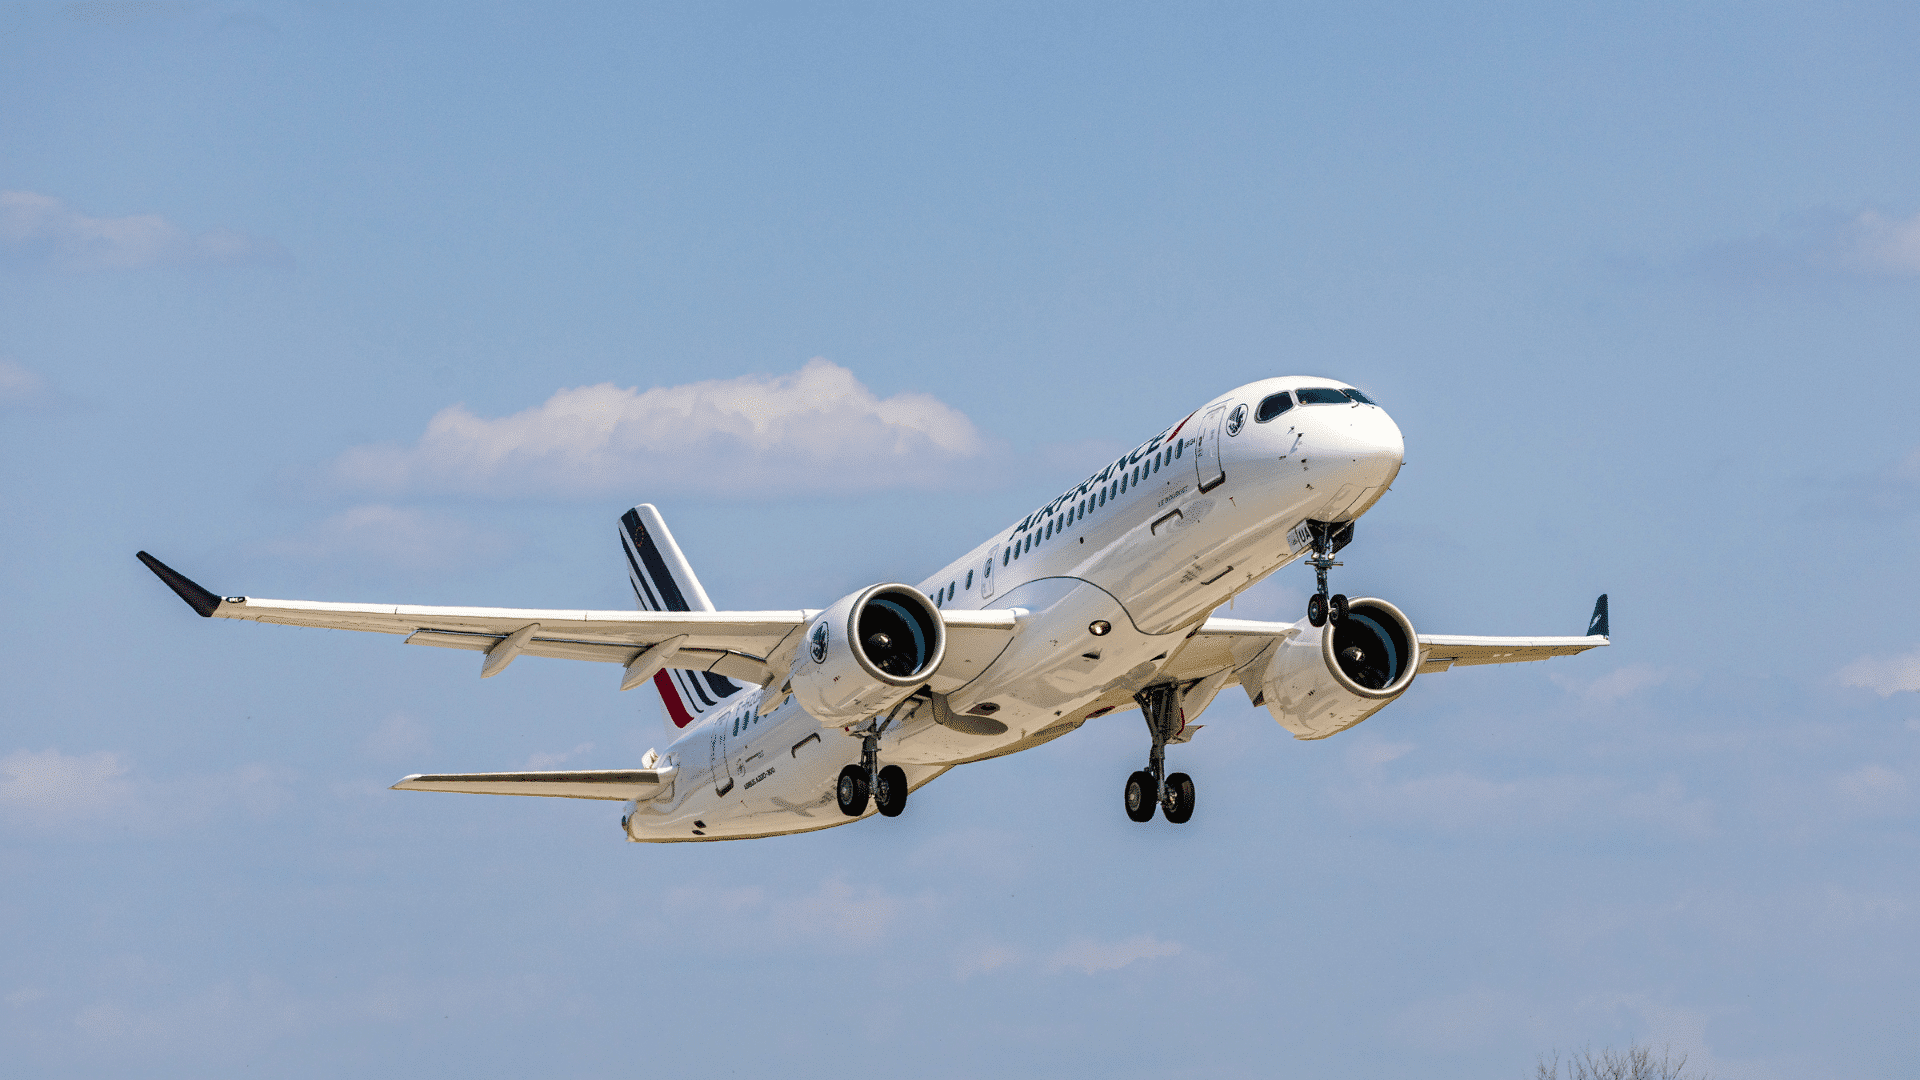 A220 Air France Inlandsflugverbot